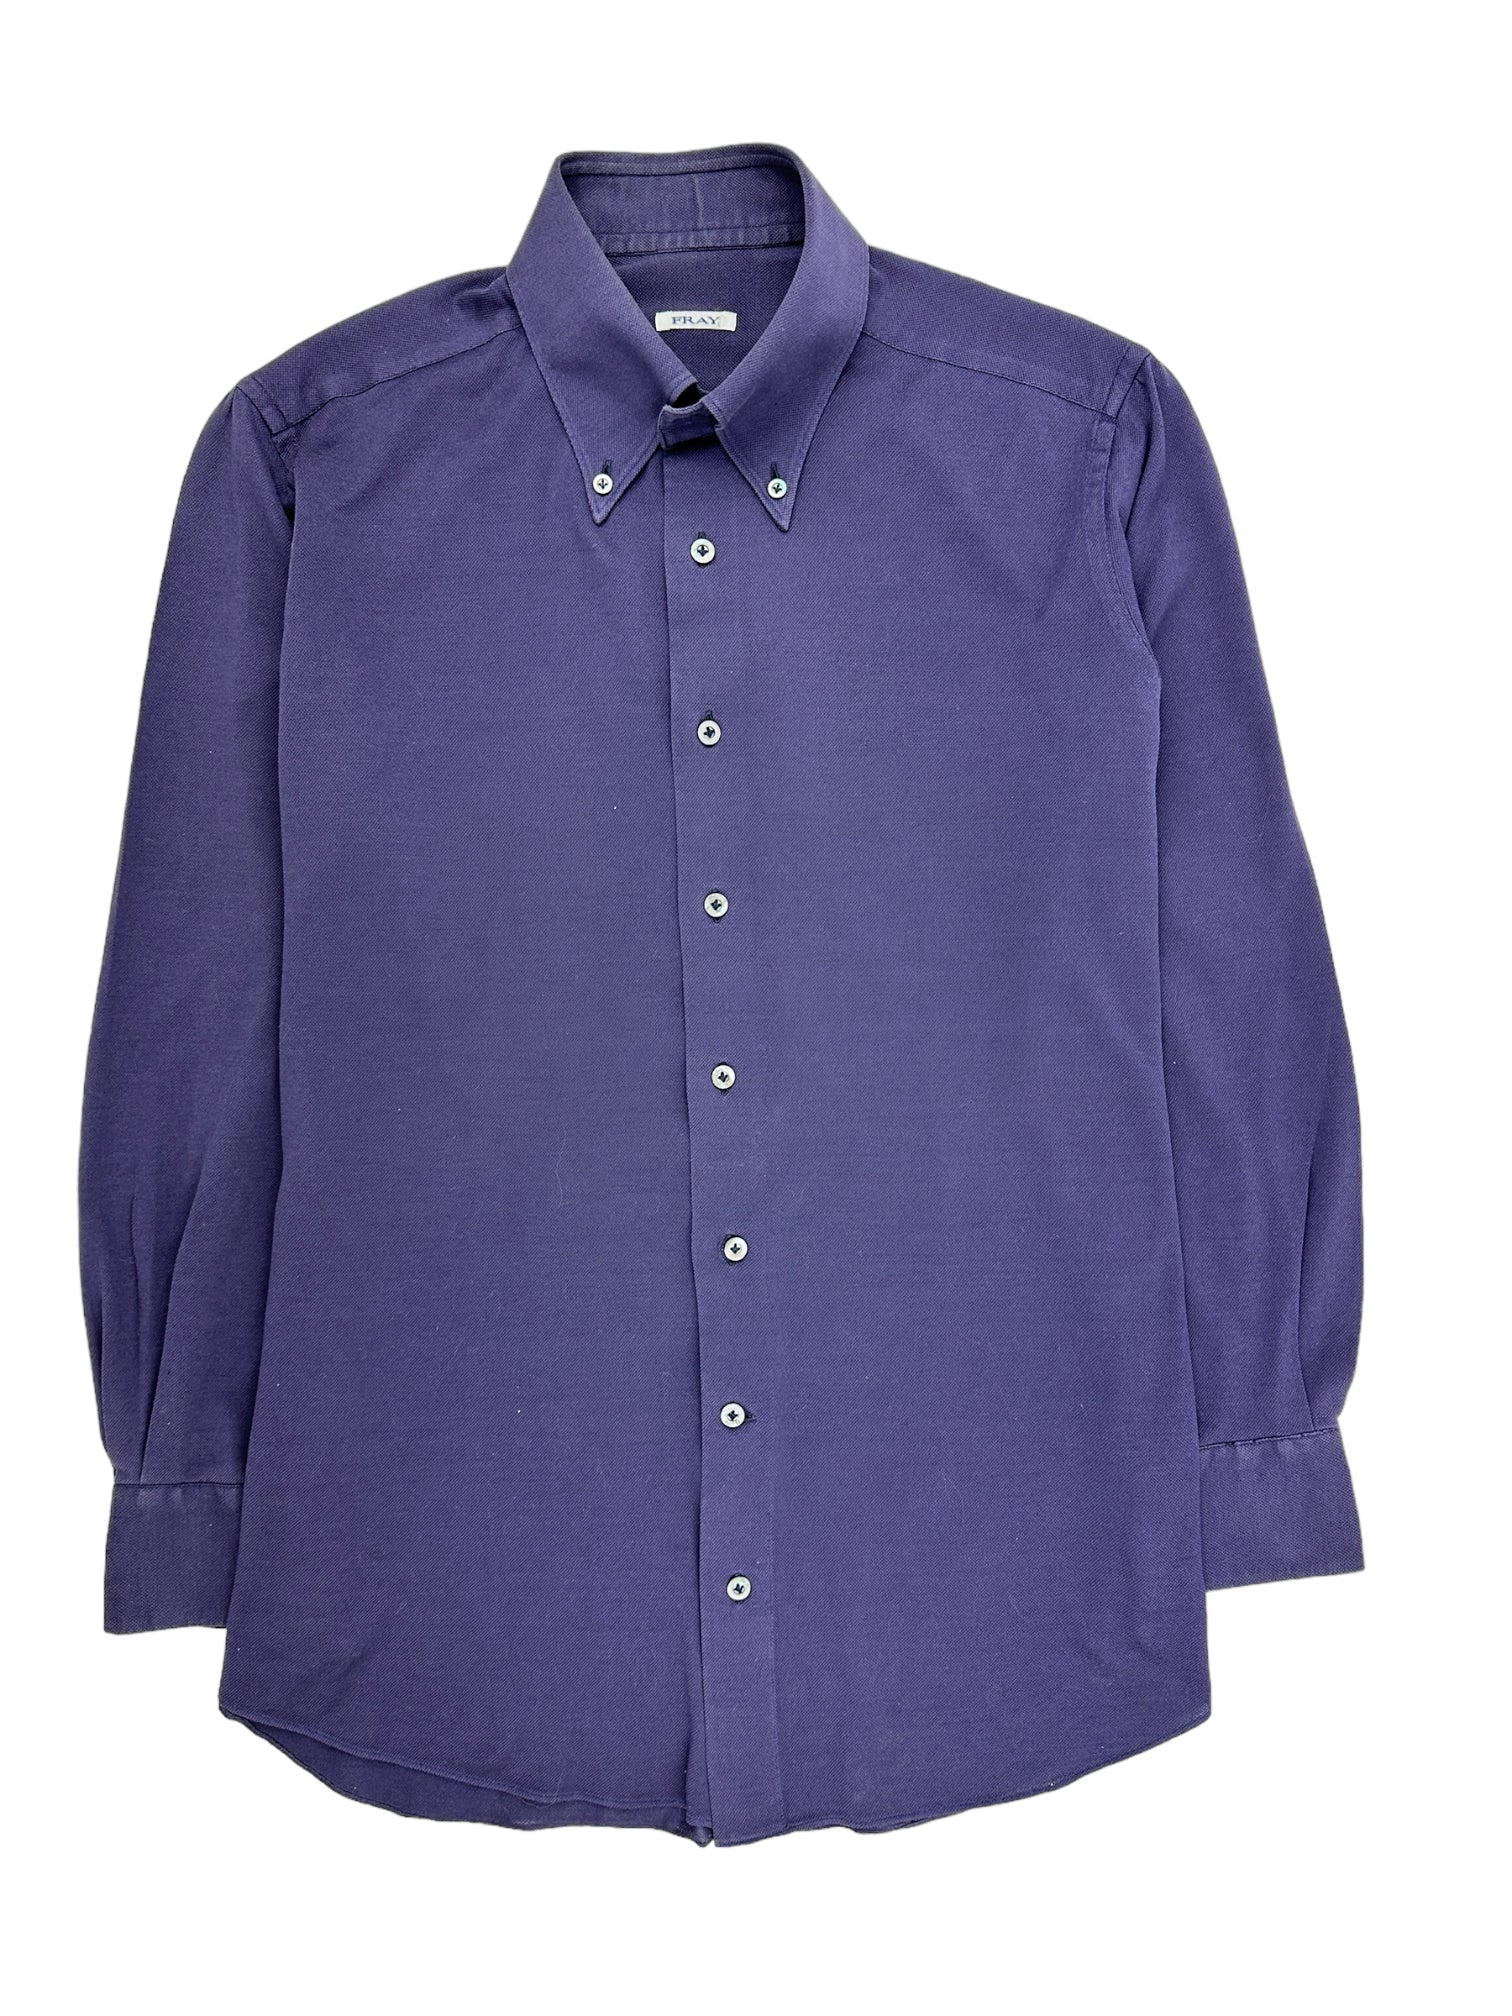 Fray Purple Piqué Button Down Collar Shirt